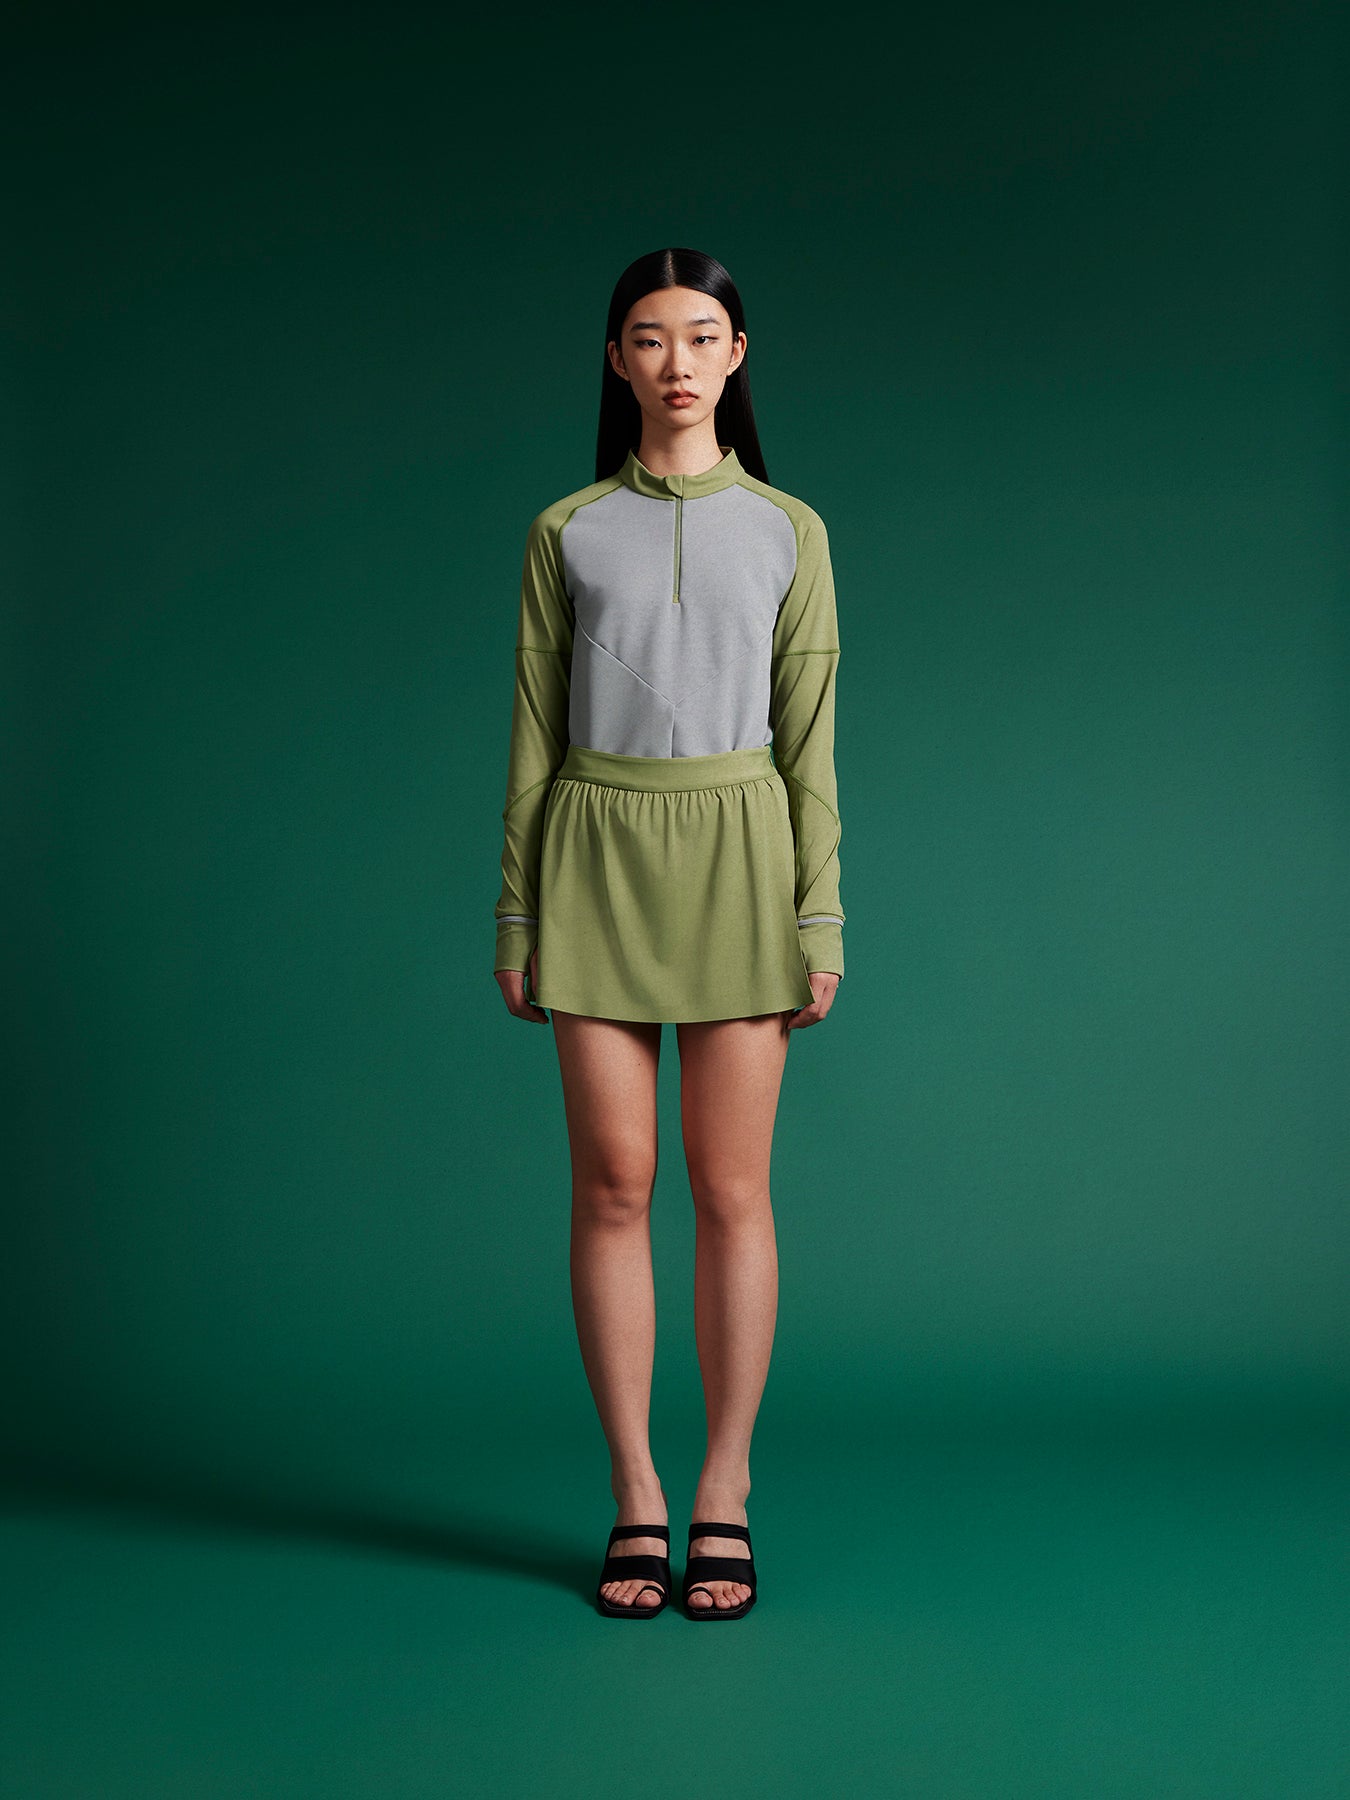 model wear mini green skirt with grey tops